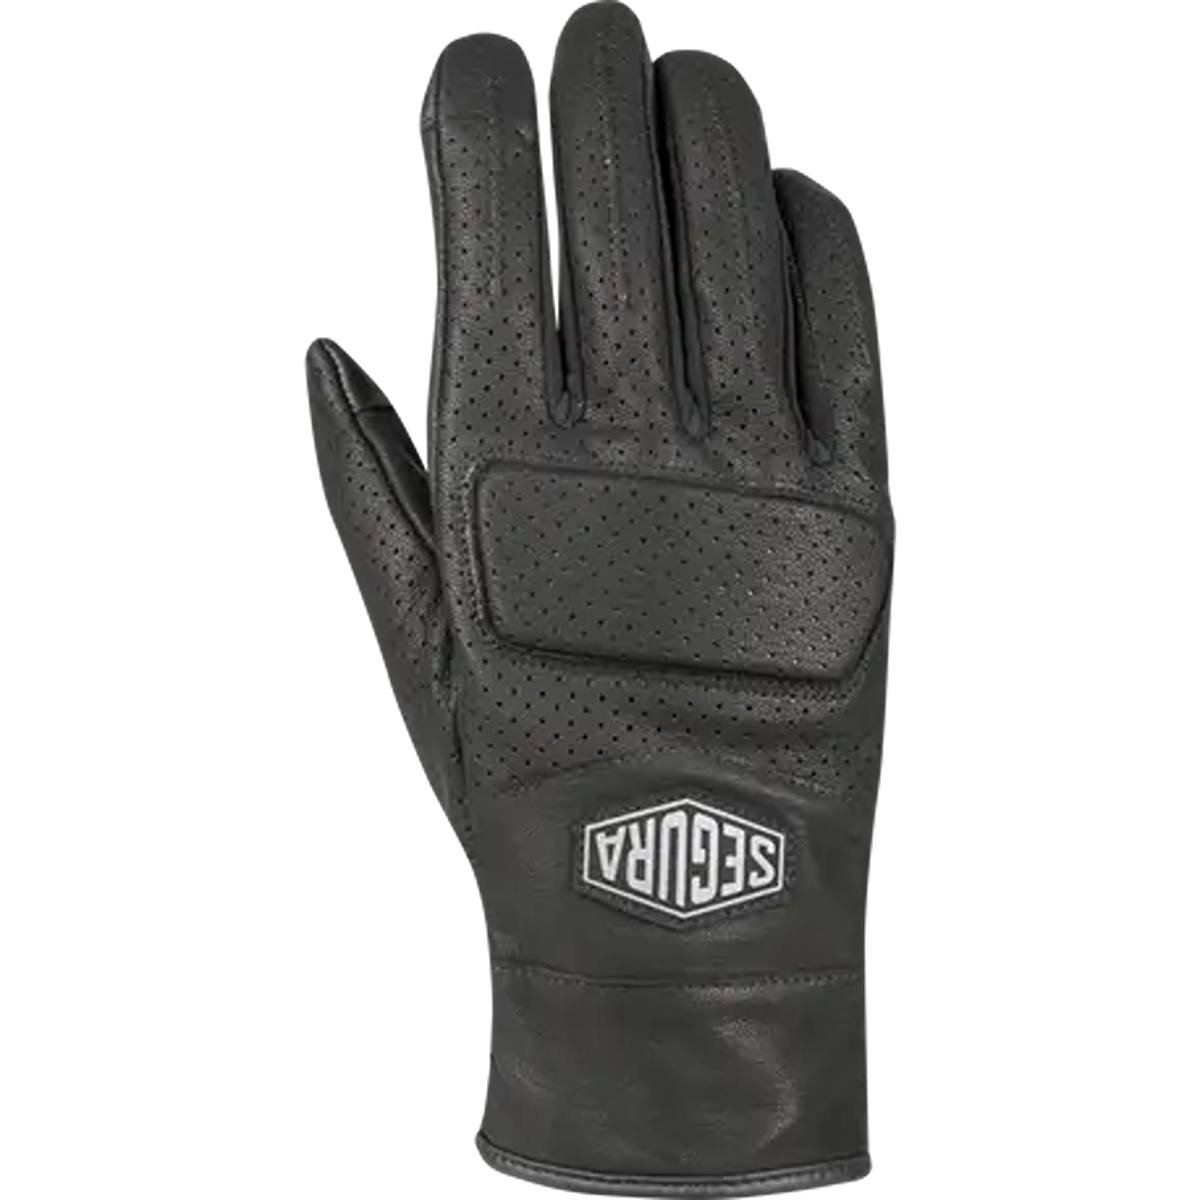 Image of Segura Bogart Gloves Black Size T11 ID 3660815190579